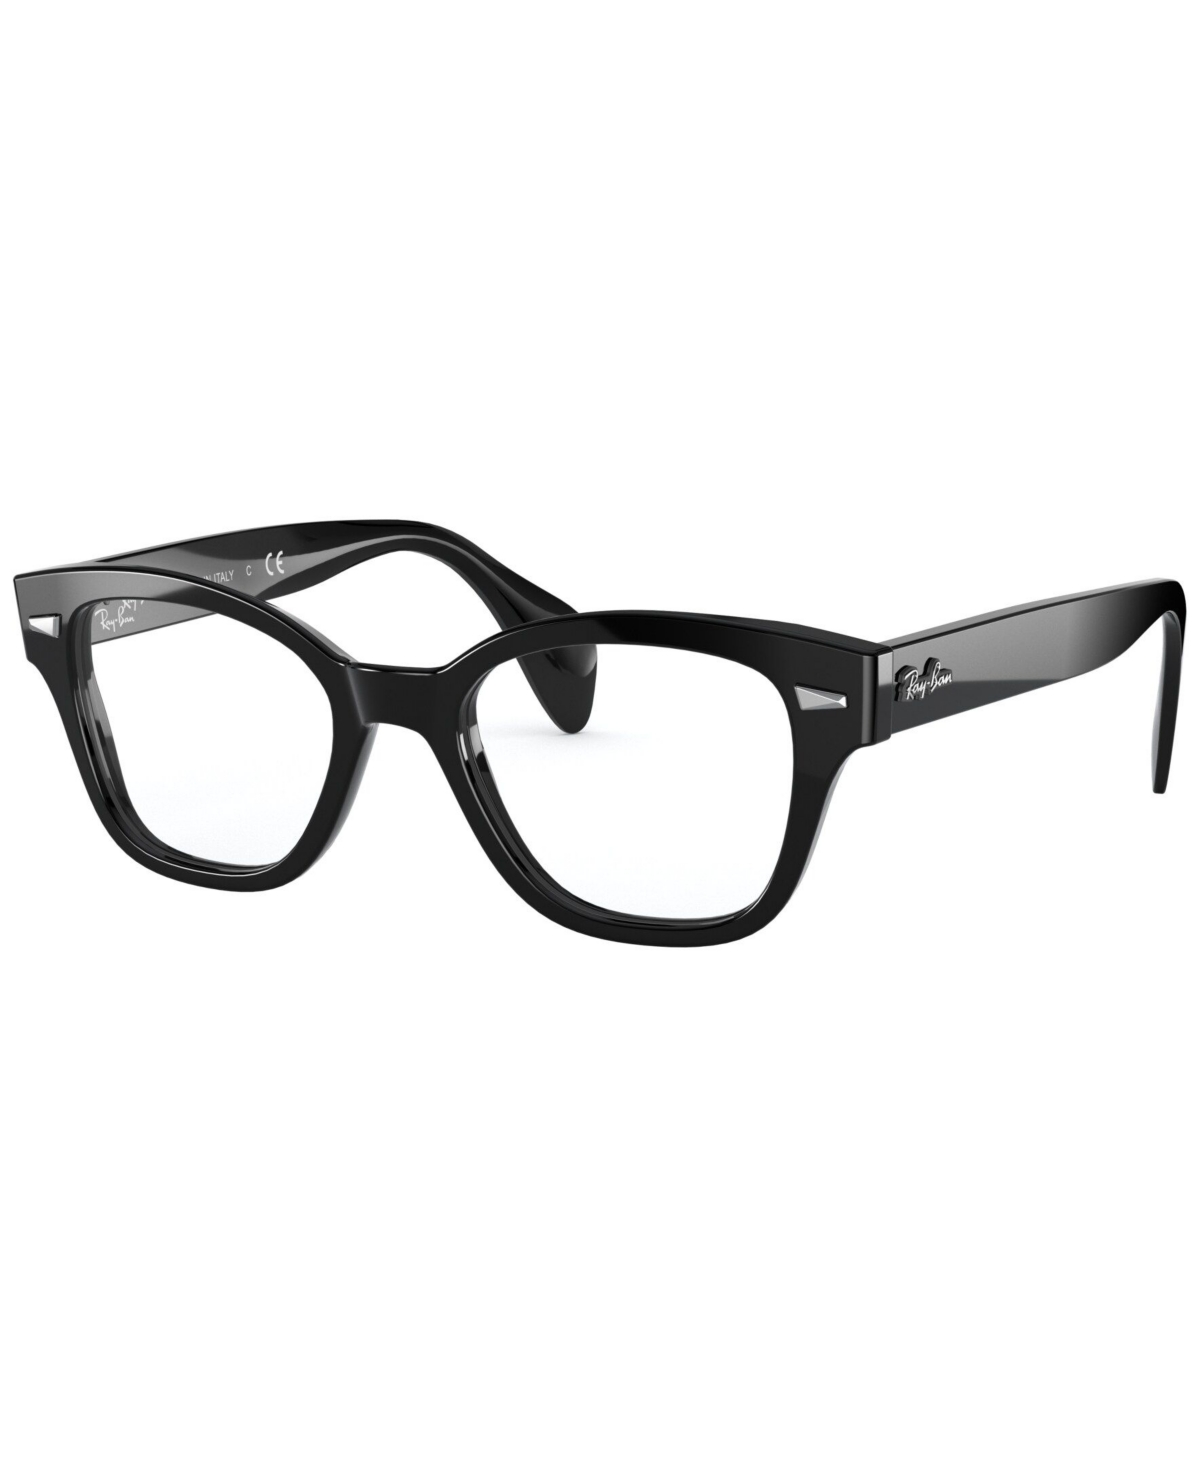 RX0880 Unisex Square Eyeglasses - Shiny Black